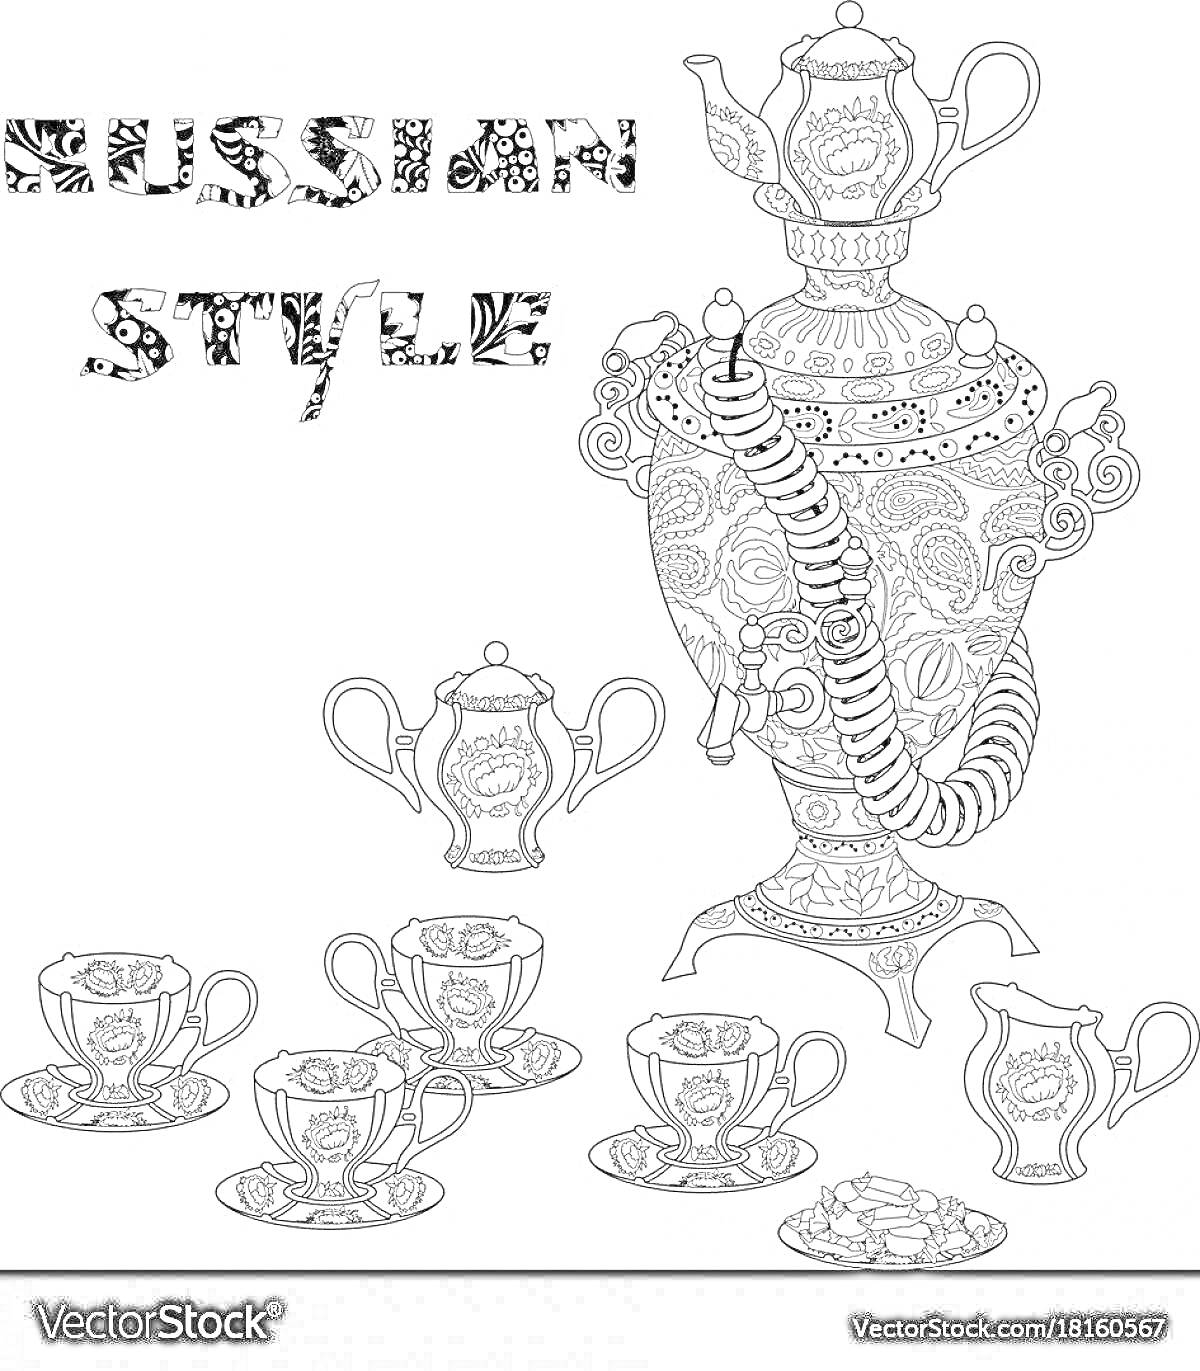 Хохлома самовар с чашками, блюдцами, сахарницей, молочником и надписью Russian Style